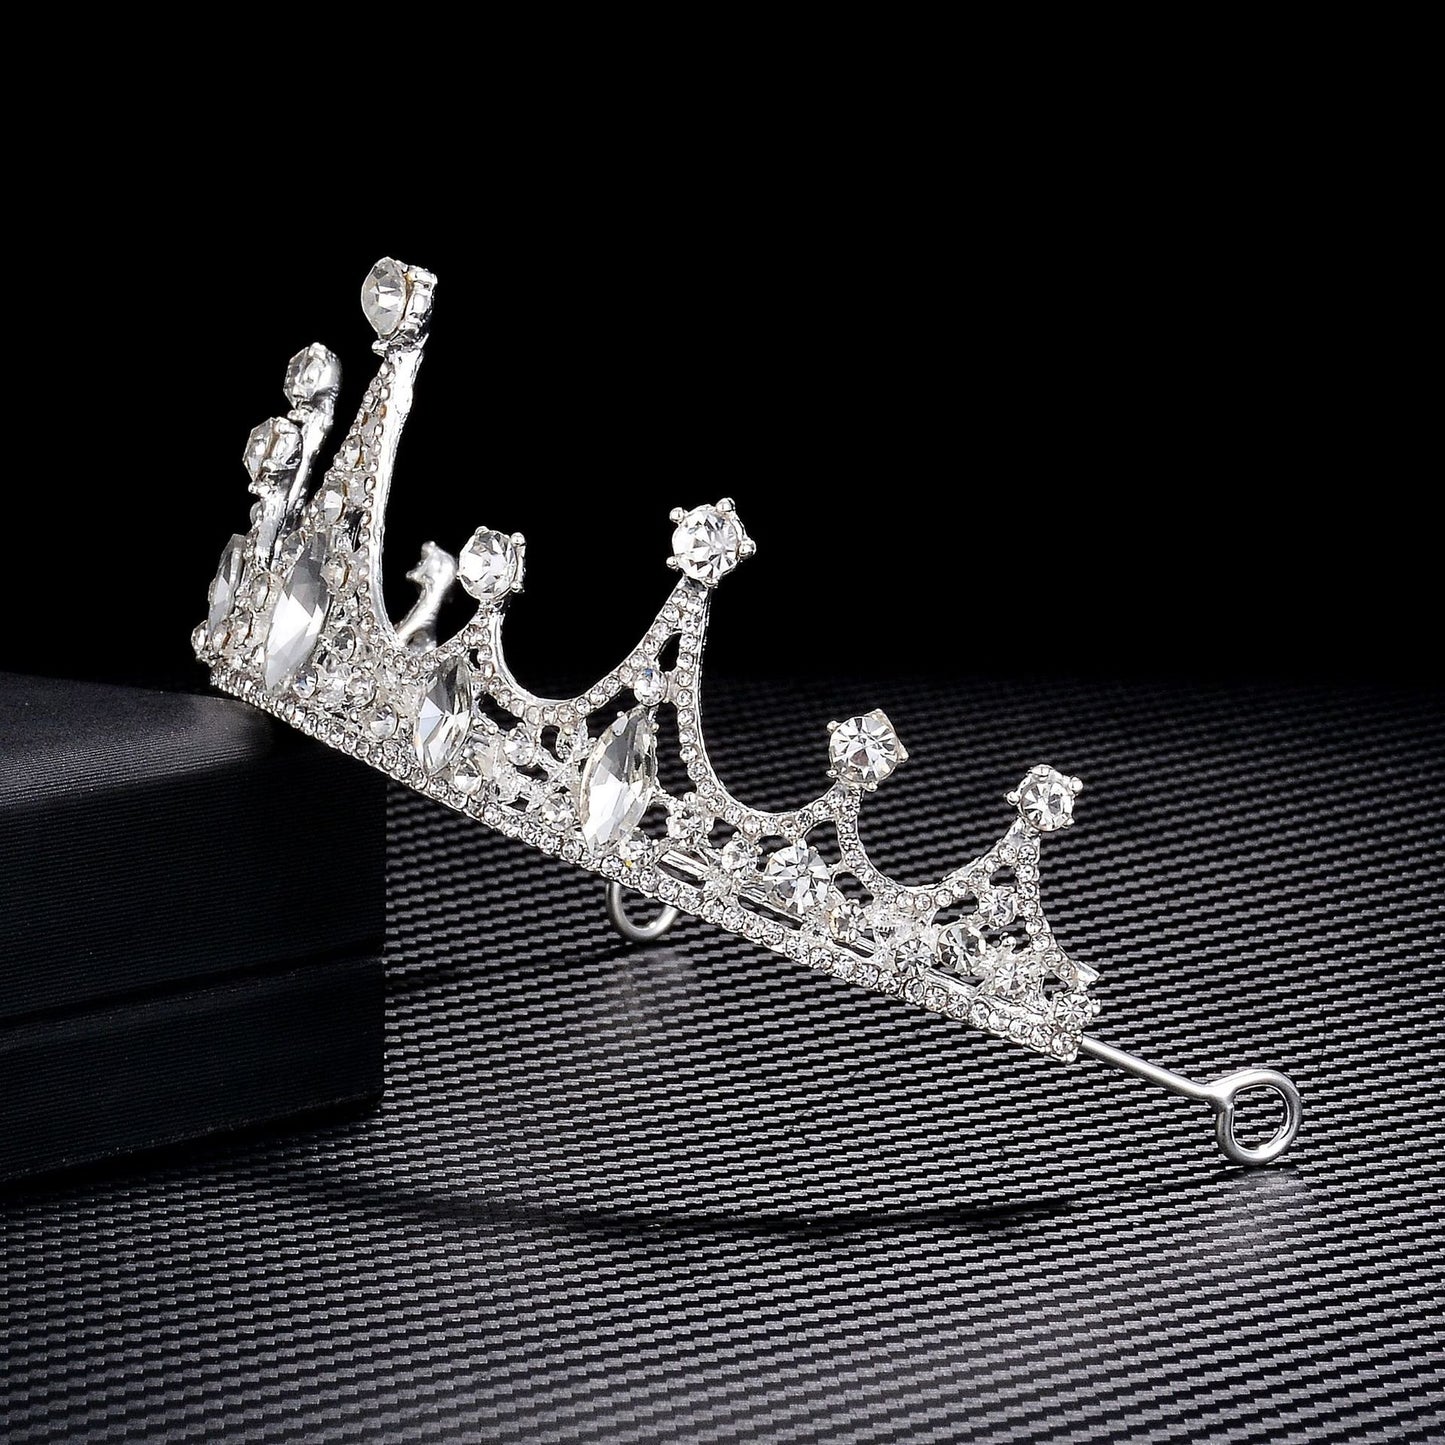 Tiara Crown For Birthday